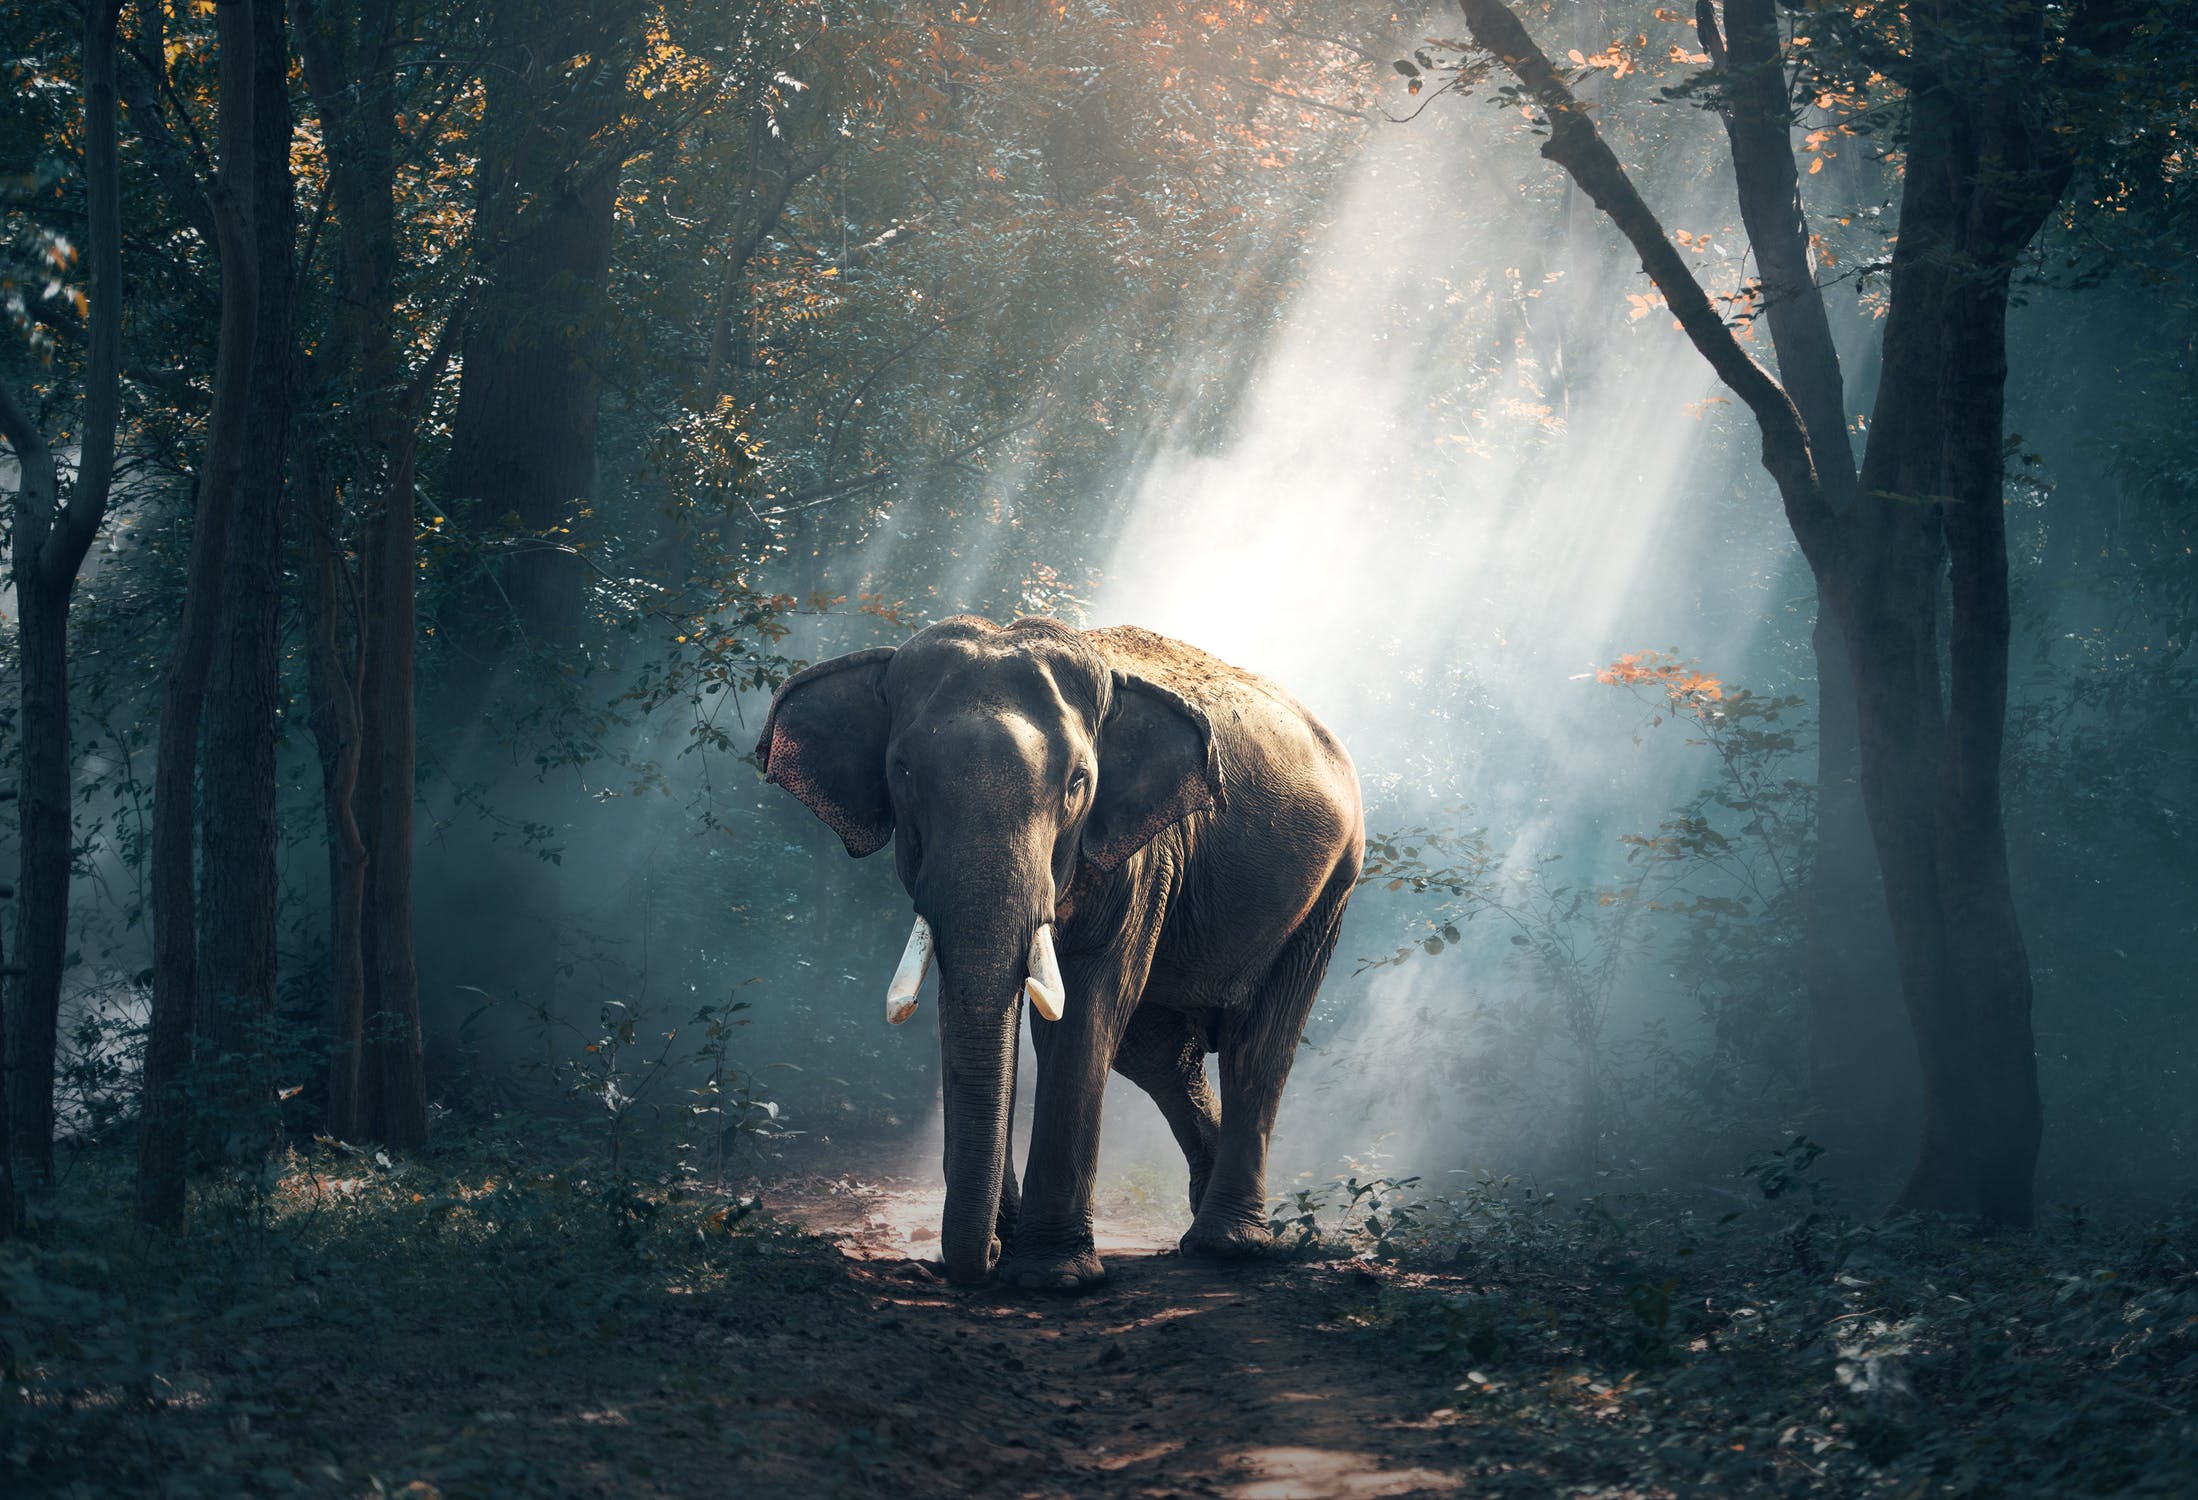 HITCO | The Elephant Sanctuary